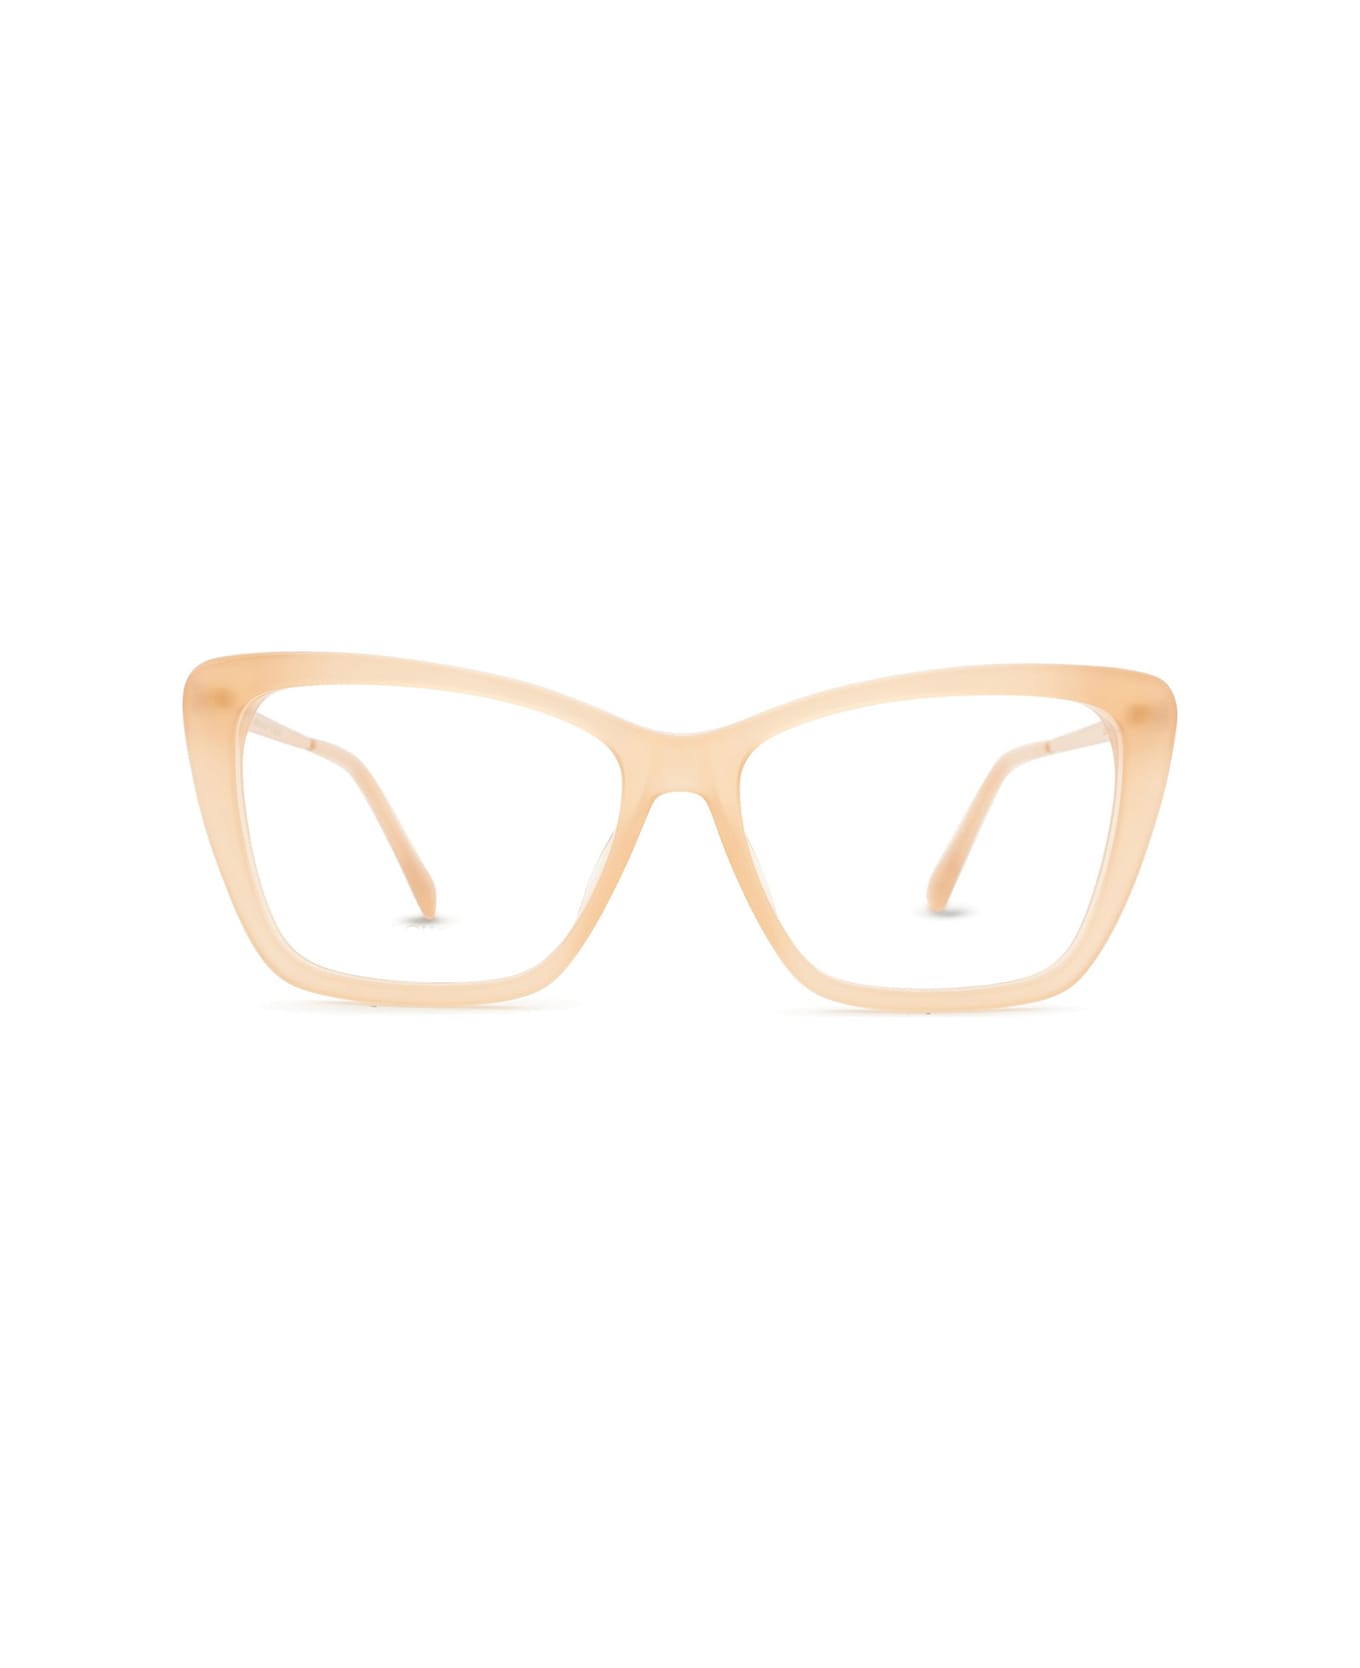 Jimmy Choo Eyewear Jc375 Fwm/15 Glasses - Rosa アイウェア